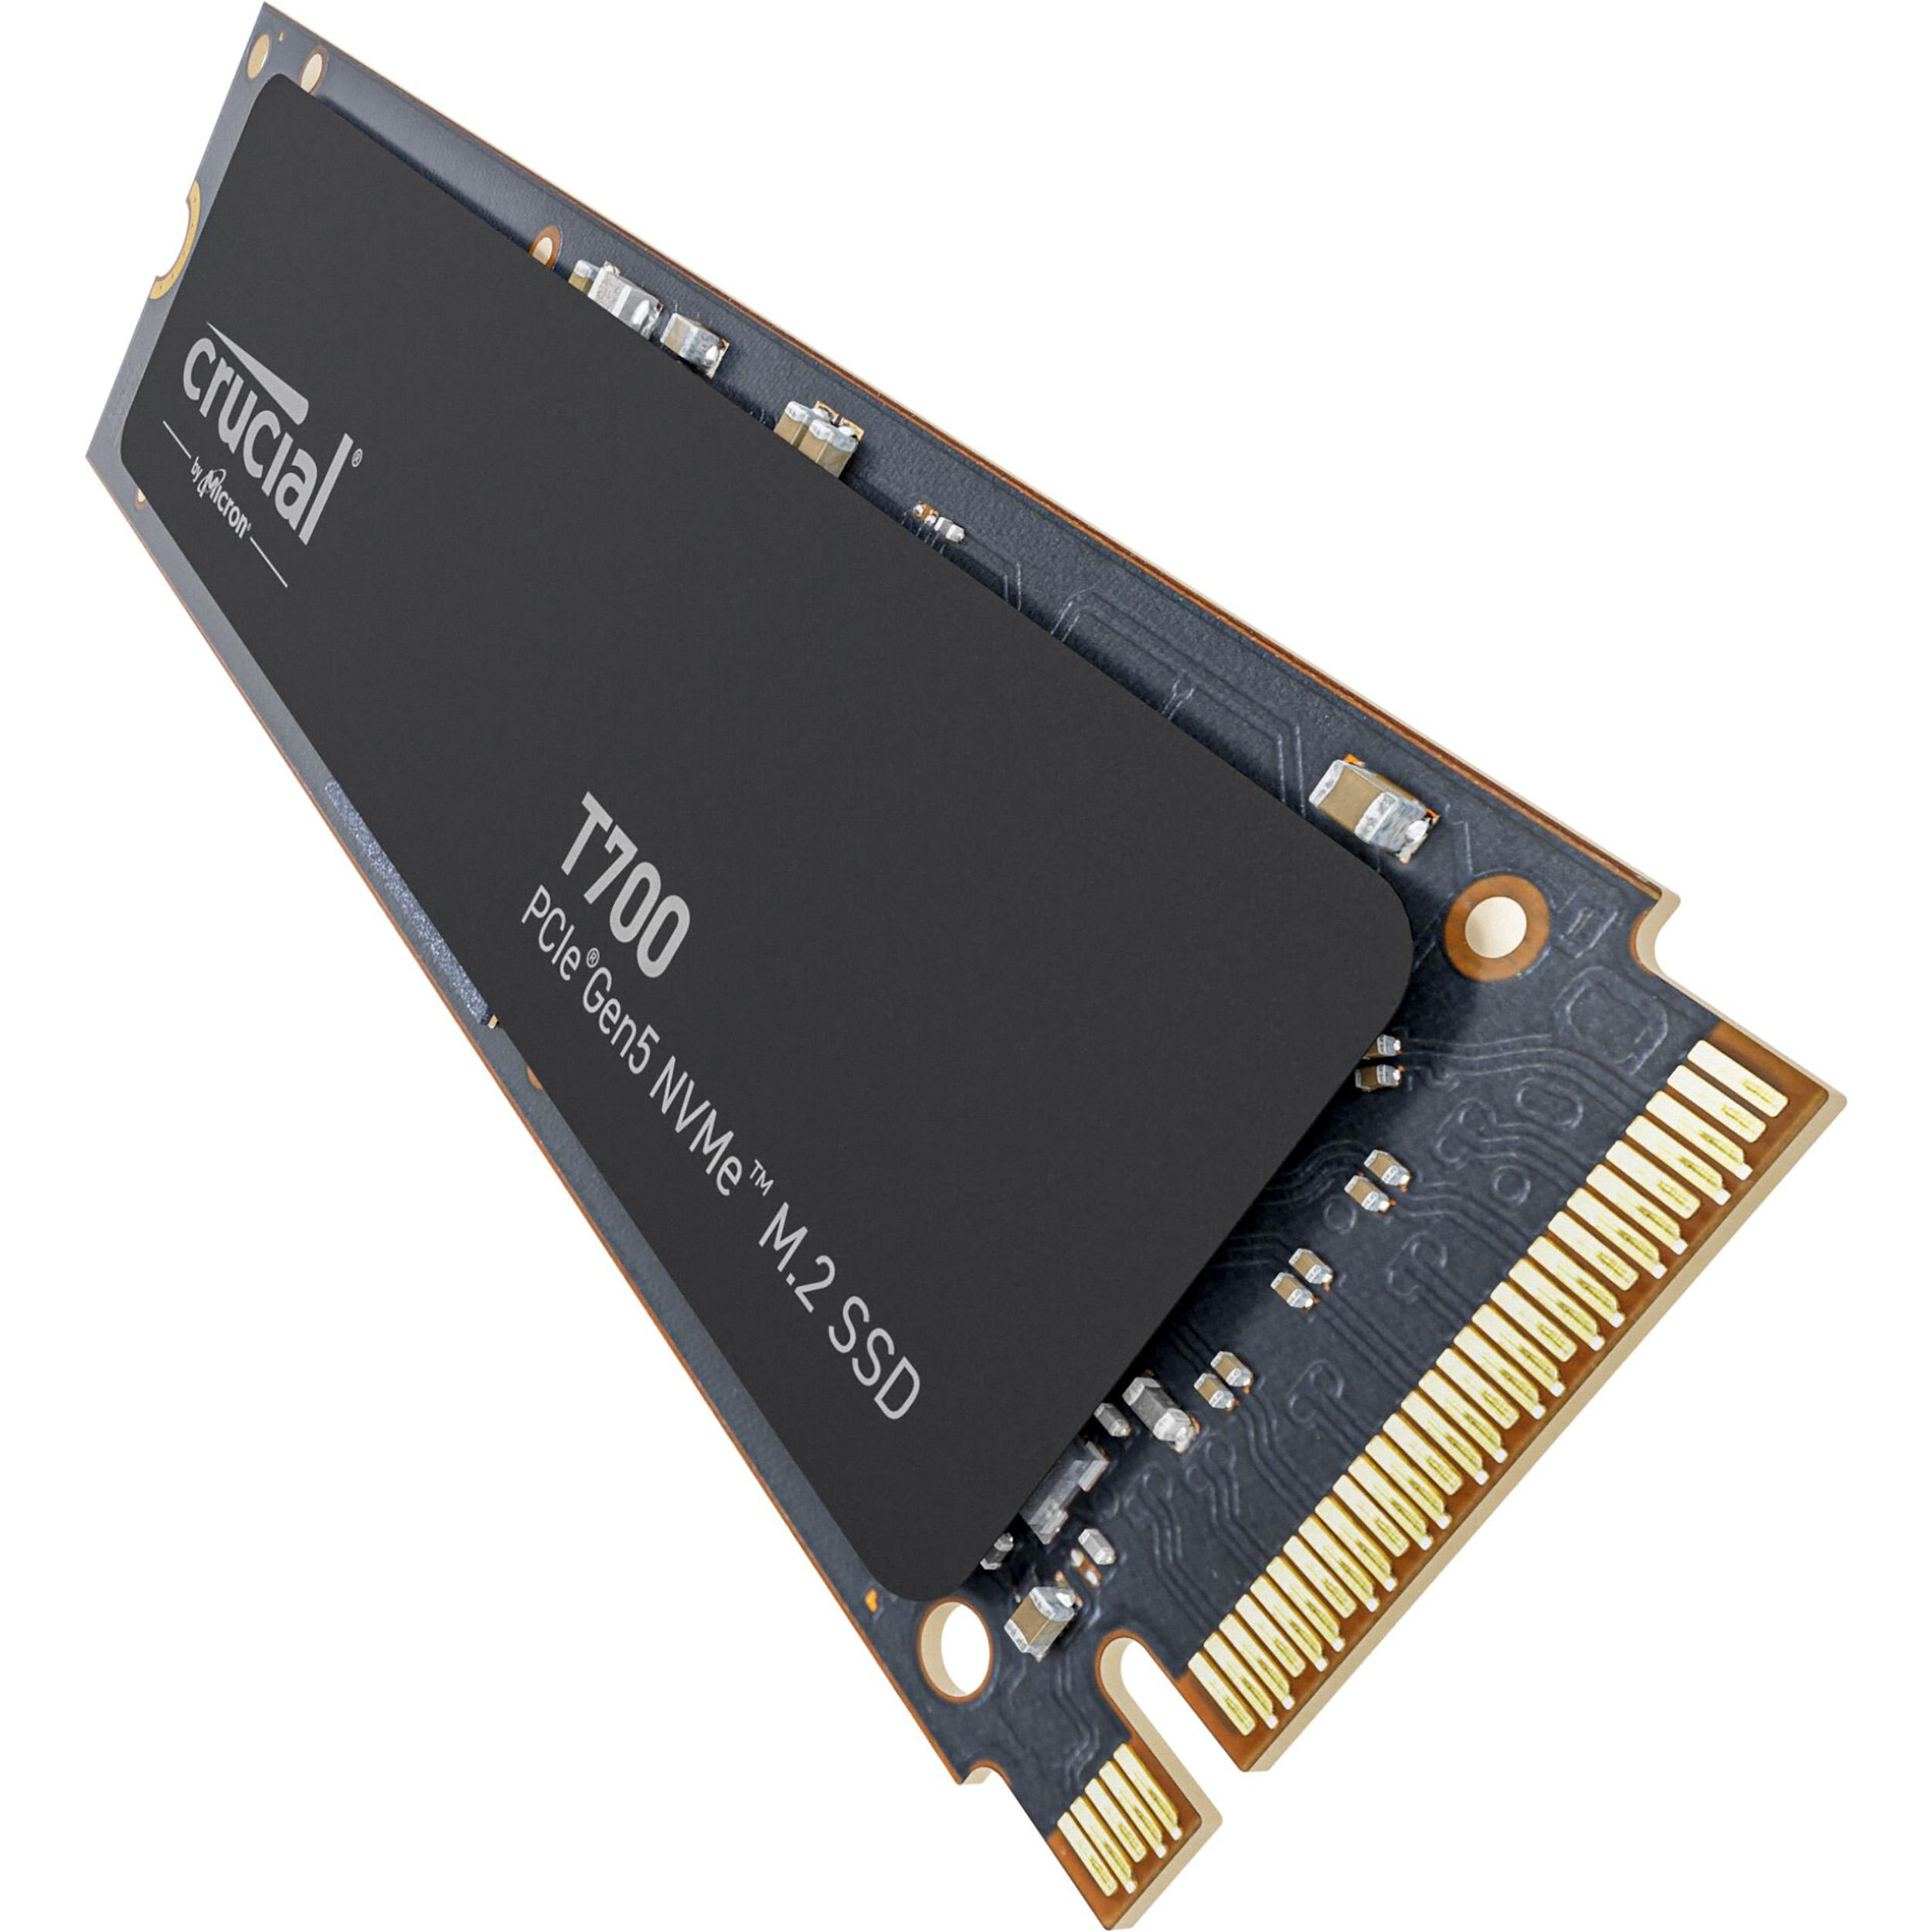 CRUCIAL T700 4TB PCIe Gen5 4 NVMe M.2, SSD, intern SSD TB